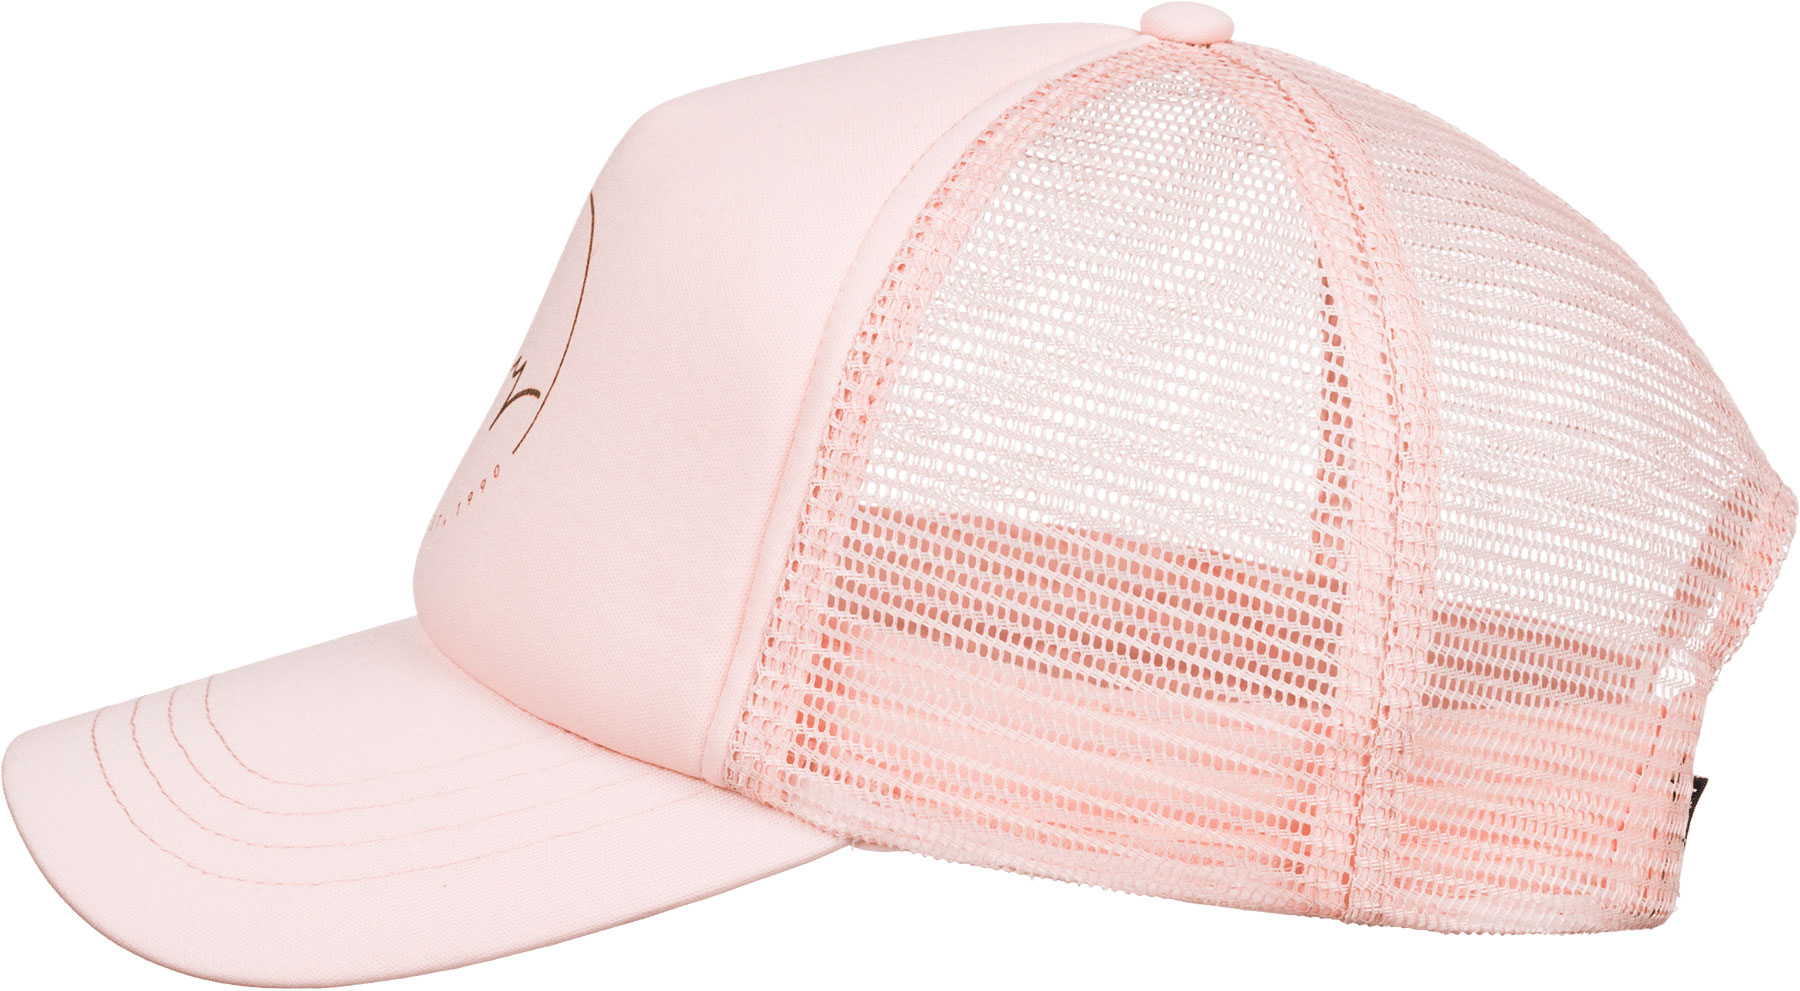 Women’s baseball cap